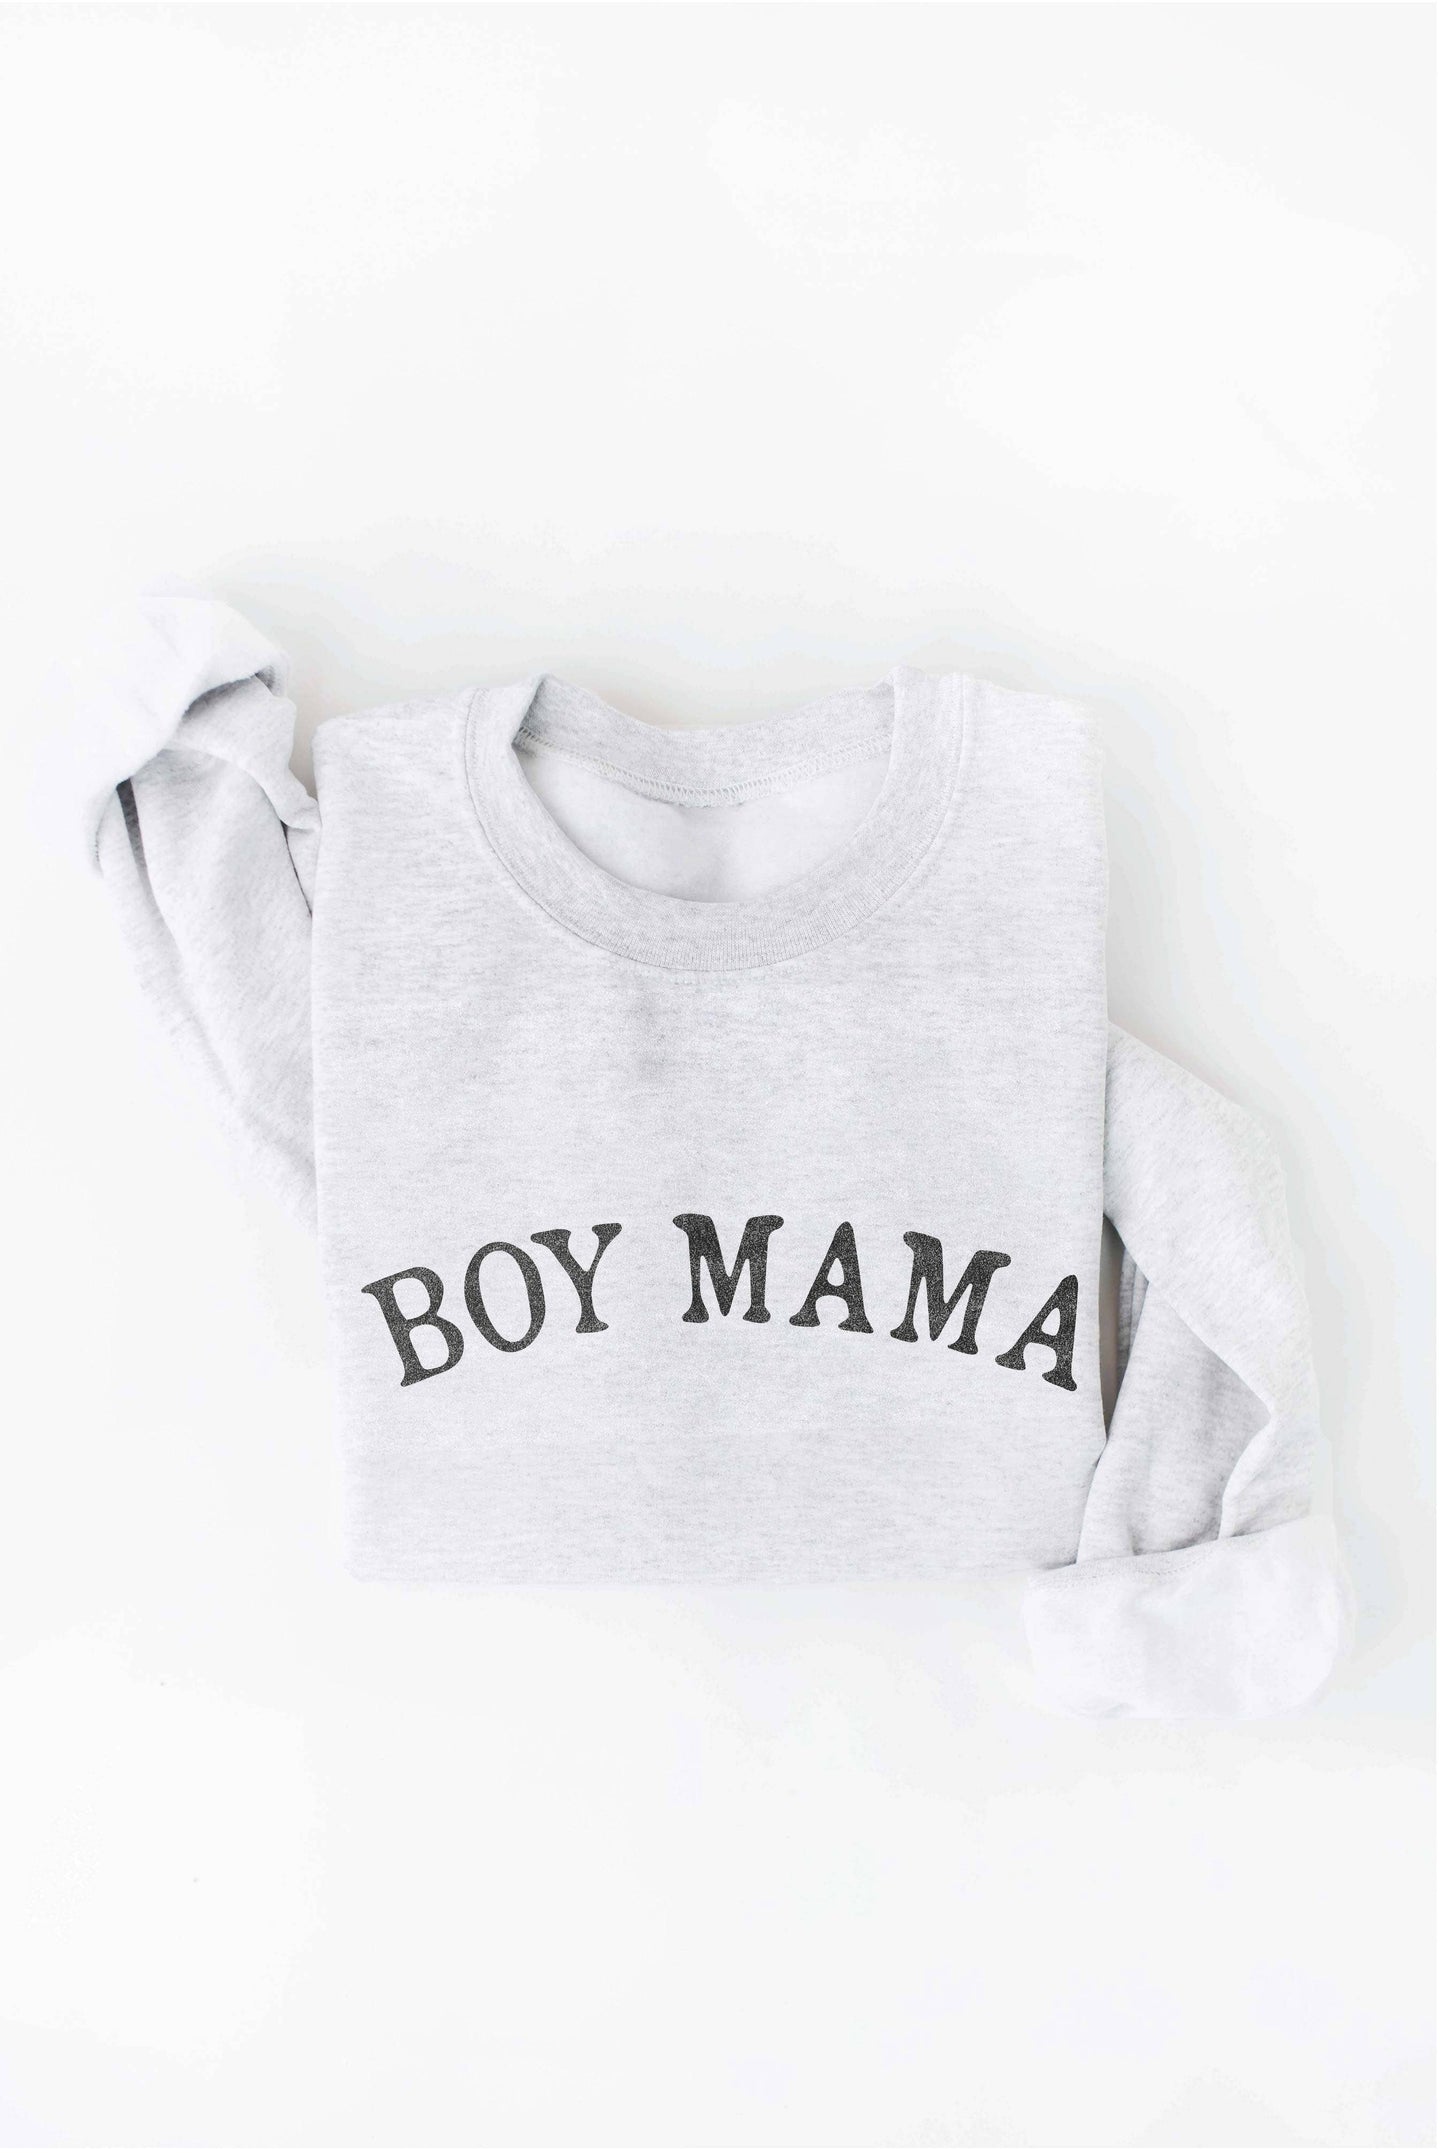 BOY MAMA Graphic Sweatshirt: L / HEATHER DUST